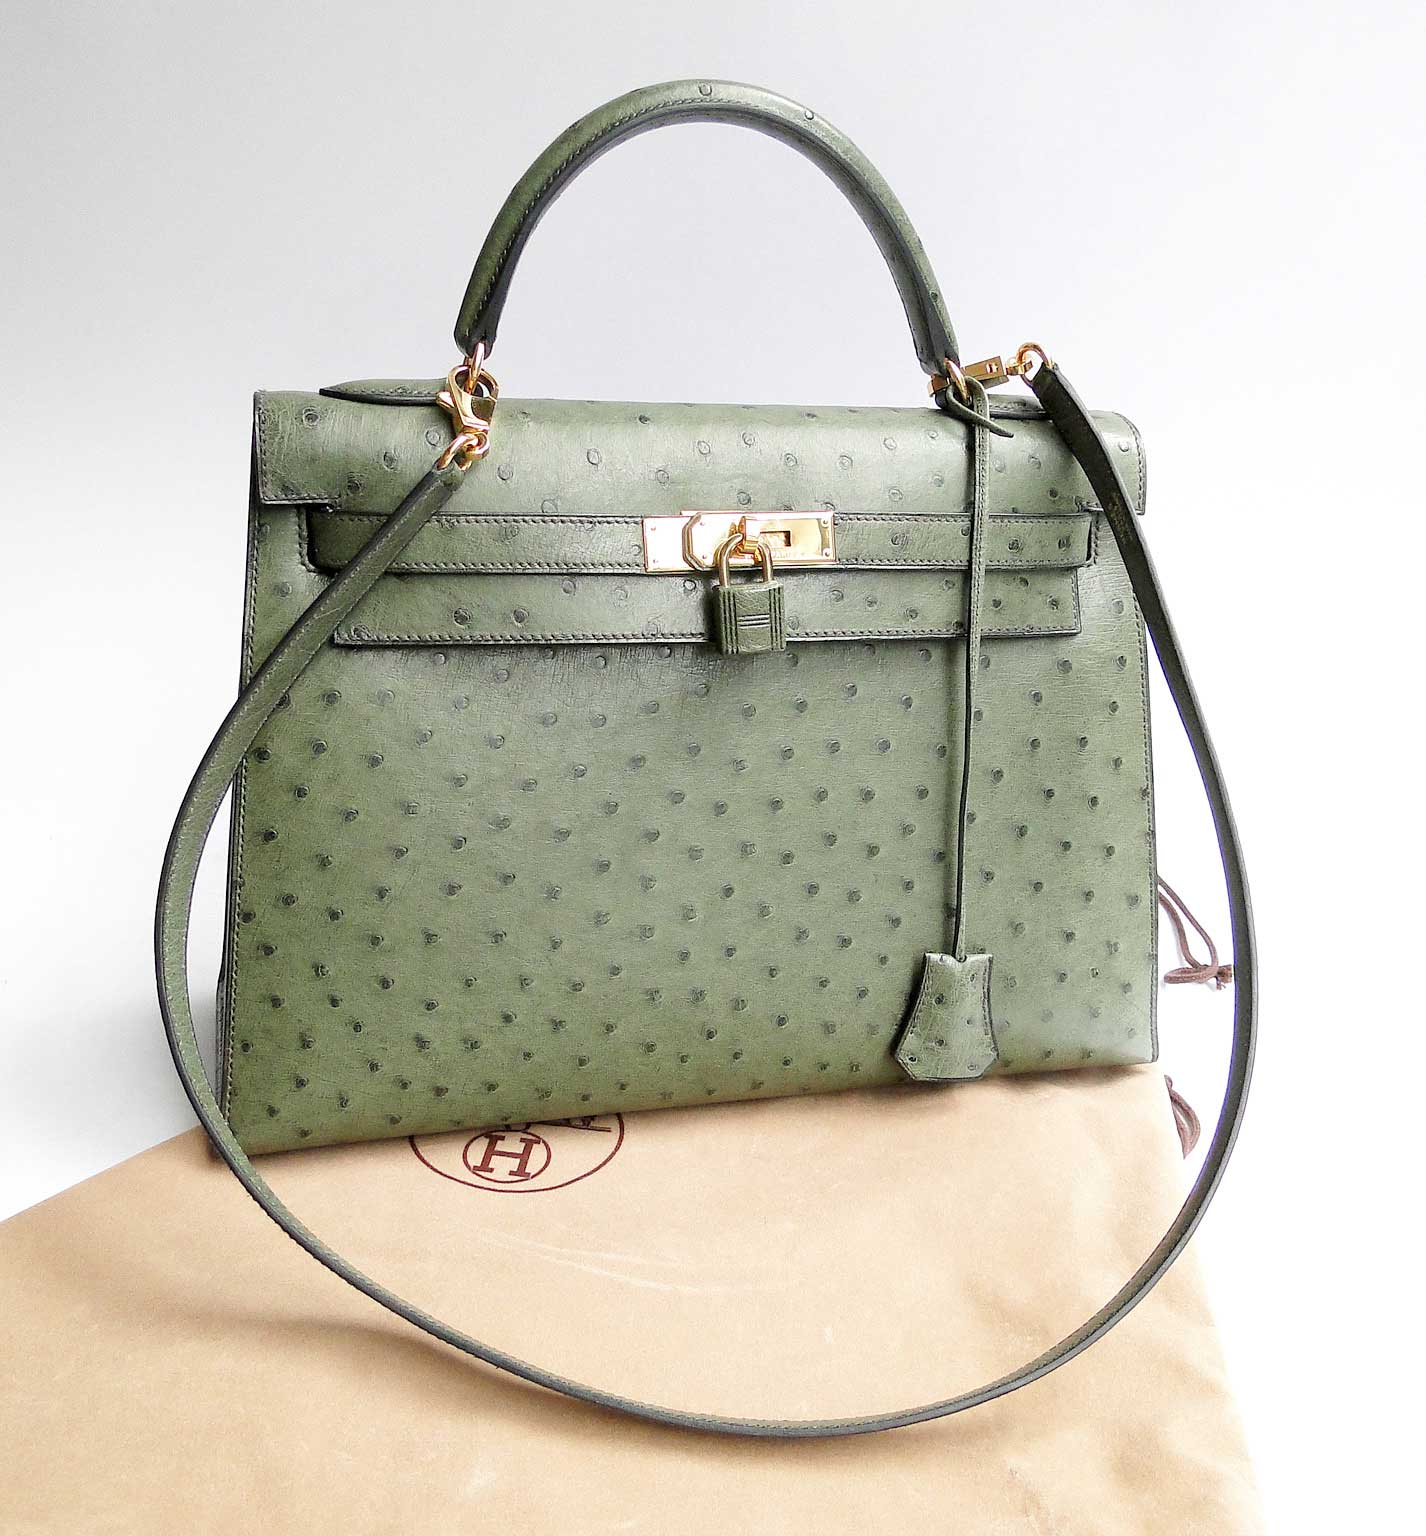 JANE BIRKIN- The muse of the MOST EXPENSIVE handbag 